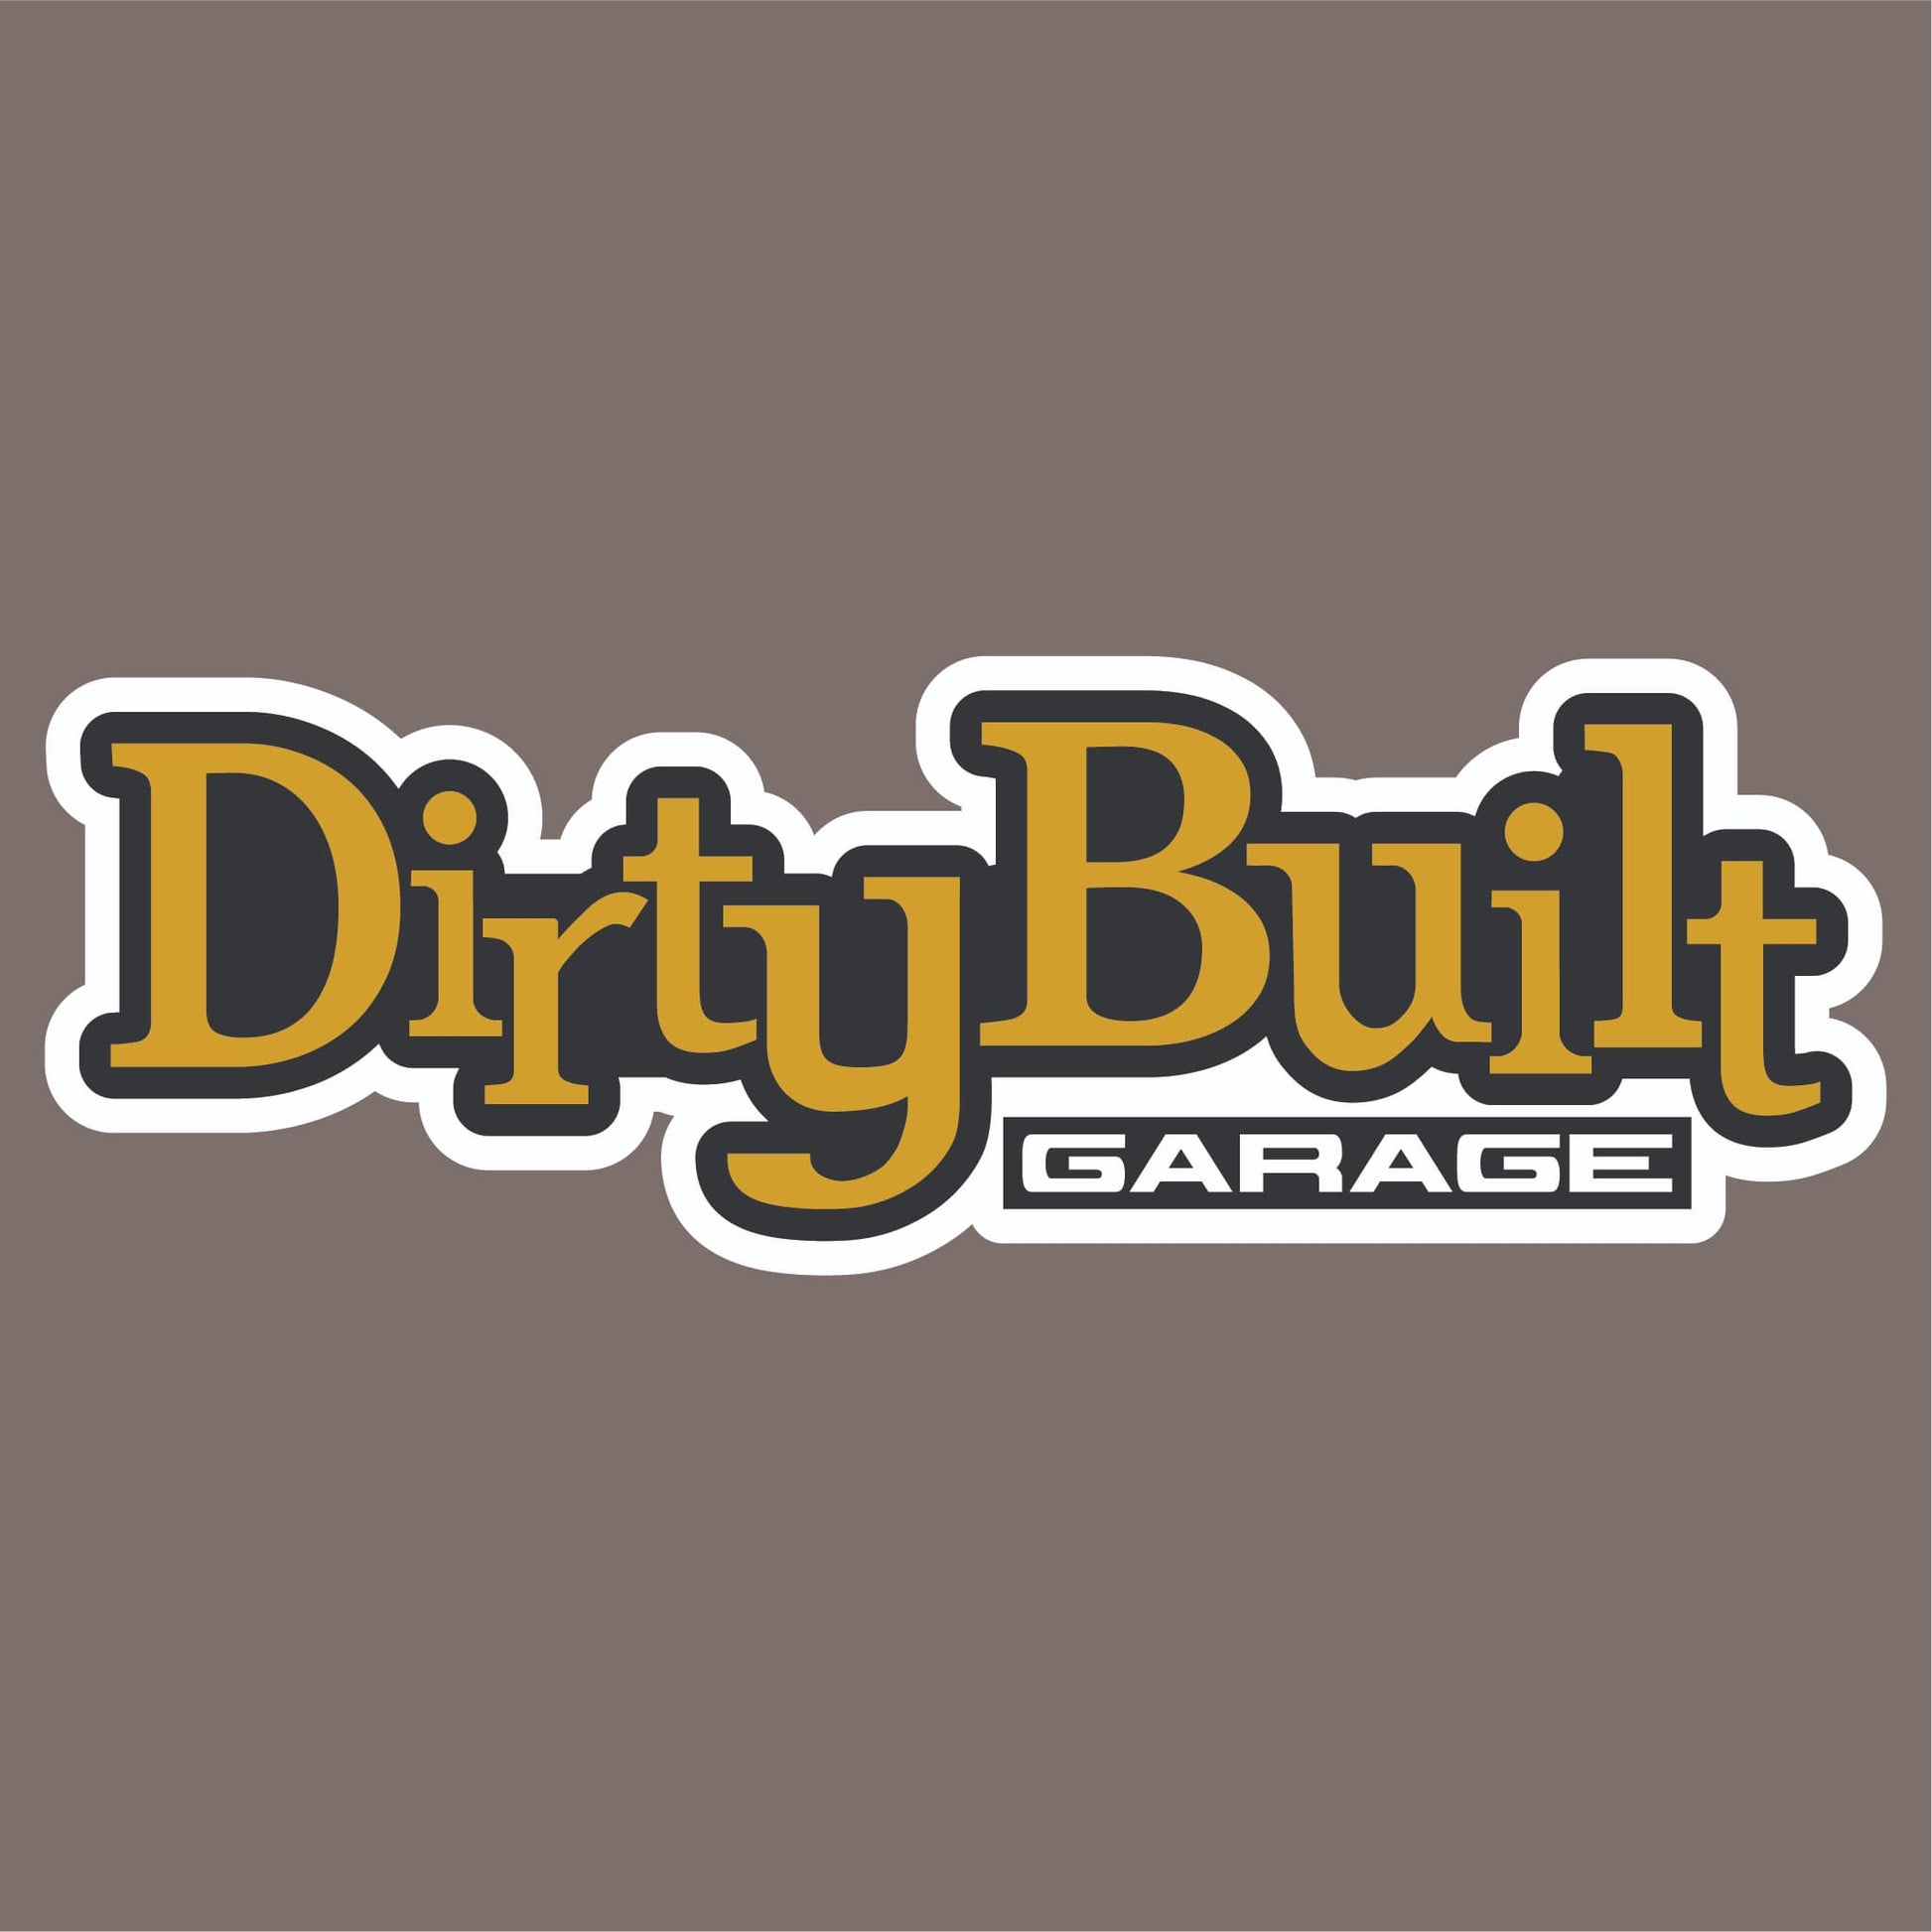 Dirty-Built-Garage-Sticker-Horizontal-1